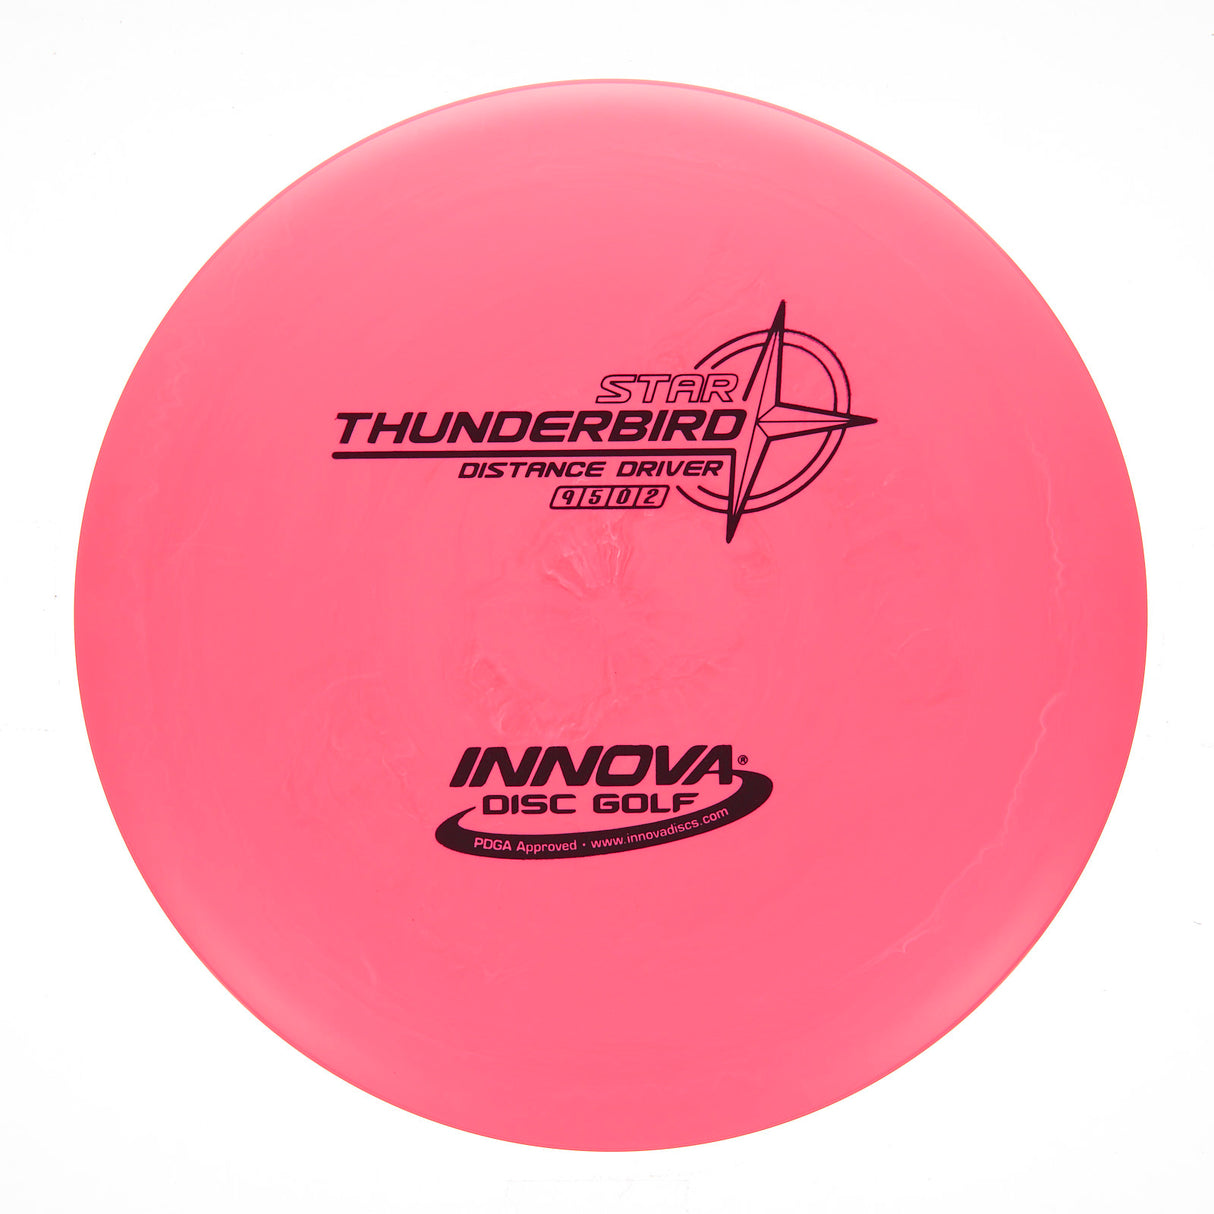 Innova Thunderbird - Star 168g | Style 0003